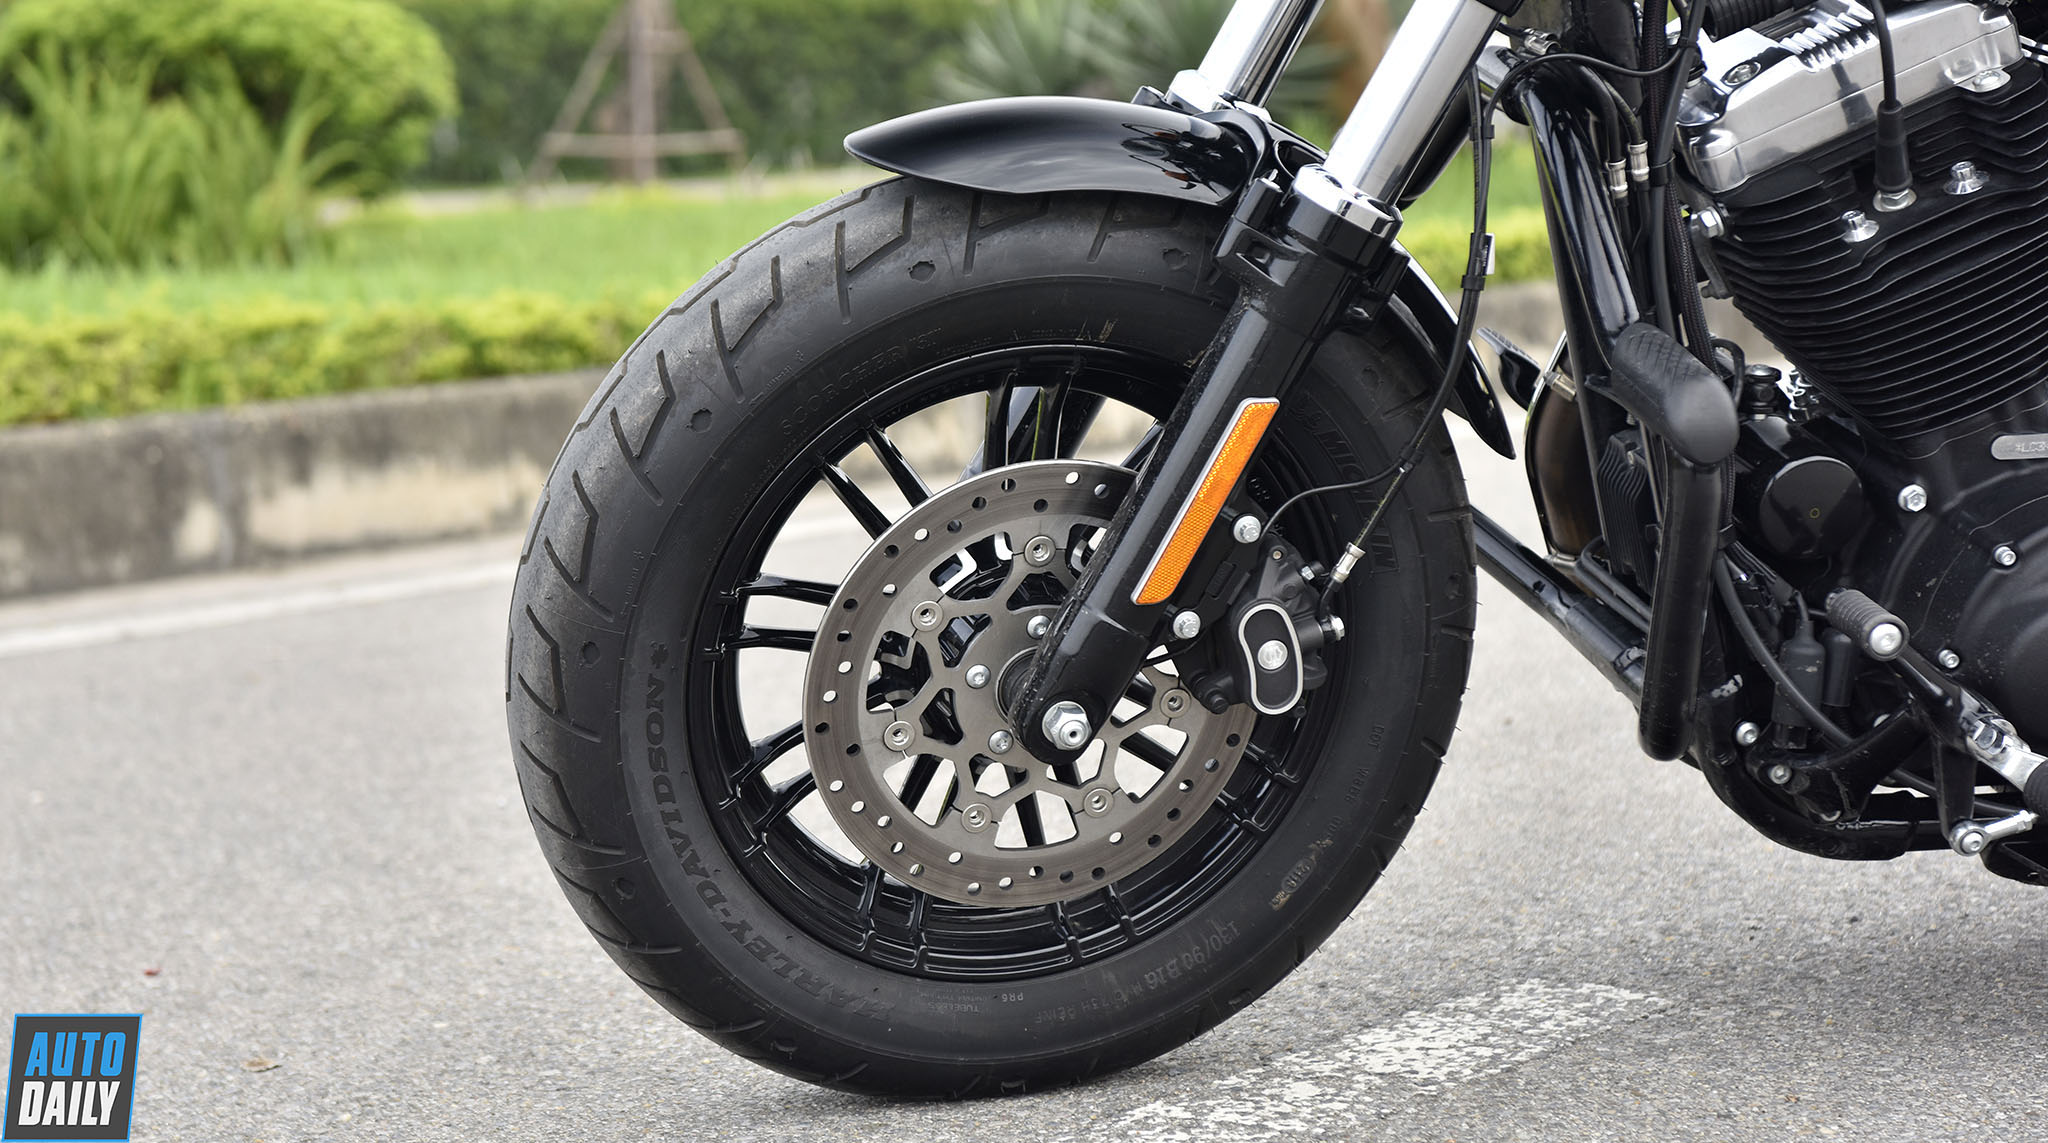 Harley-Davidson 48 2019 Review: Reasonably priced American motorcycles for Vietnamese bikers harley-dsc3351-copy-copy.jpg